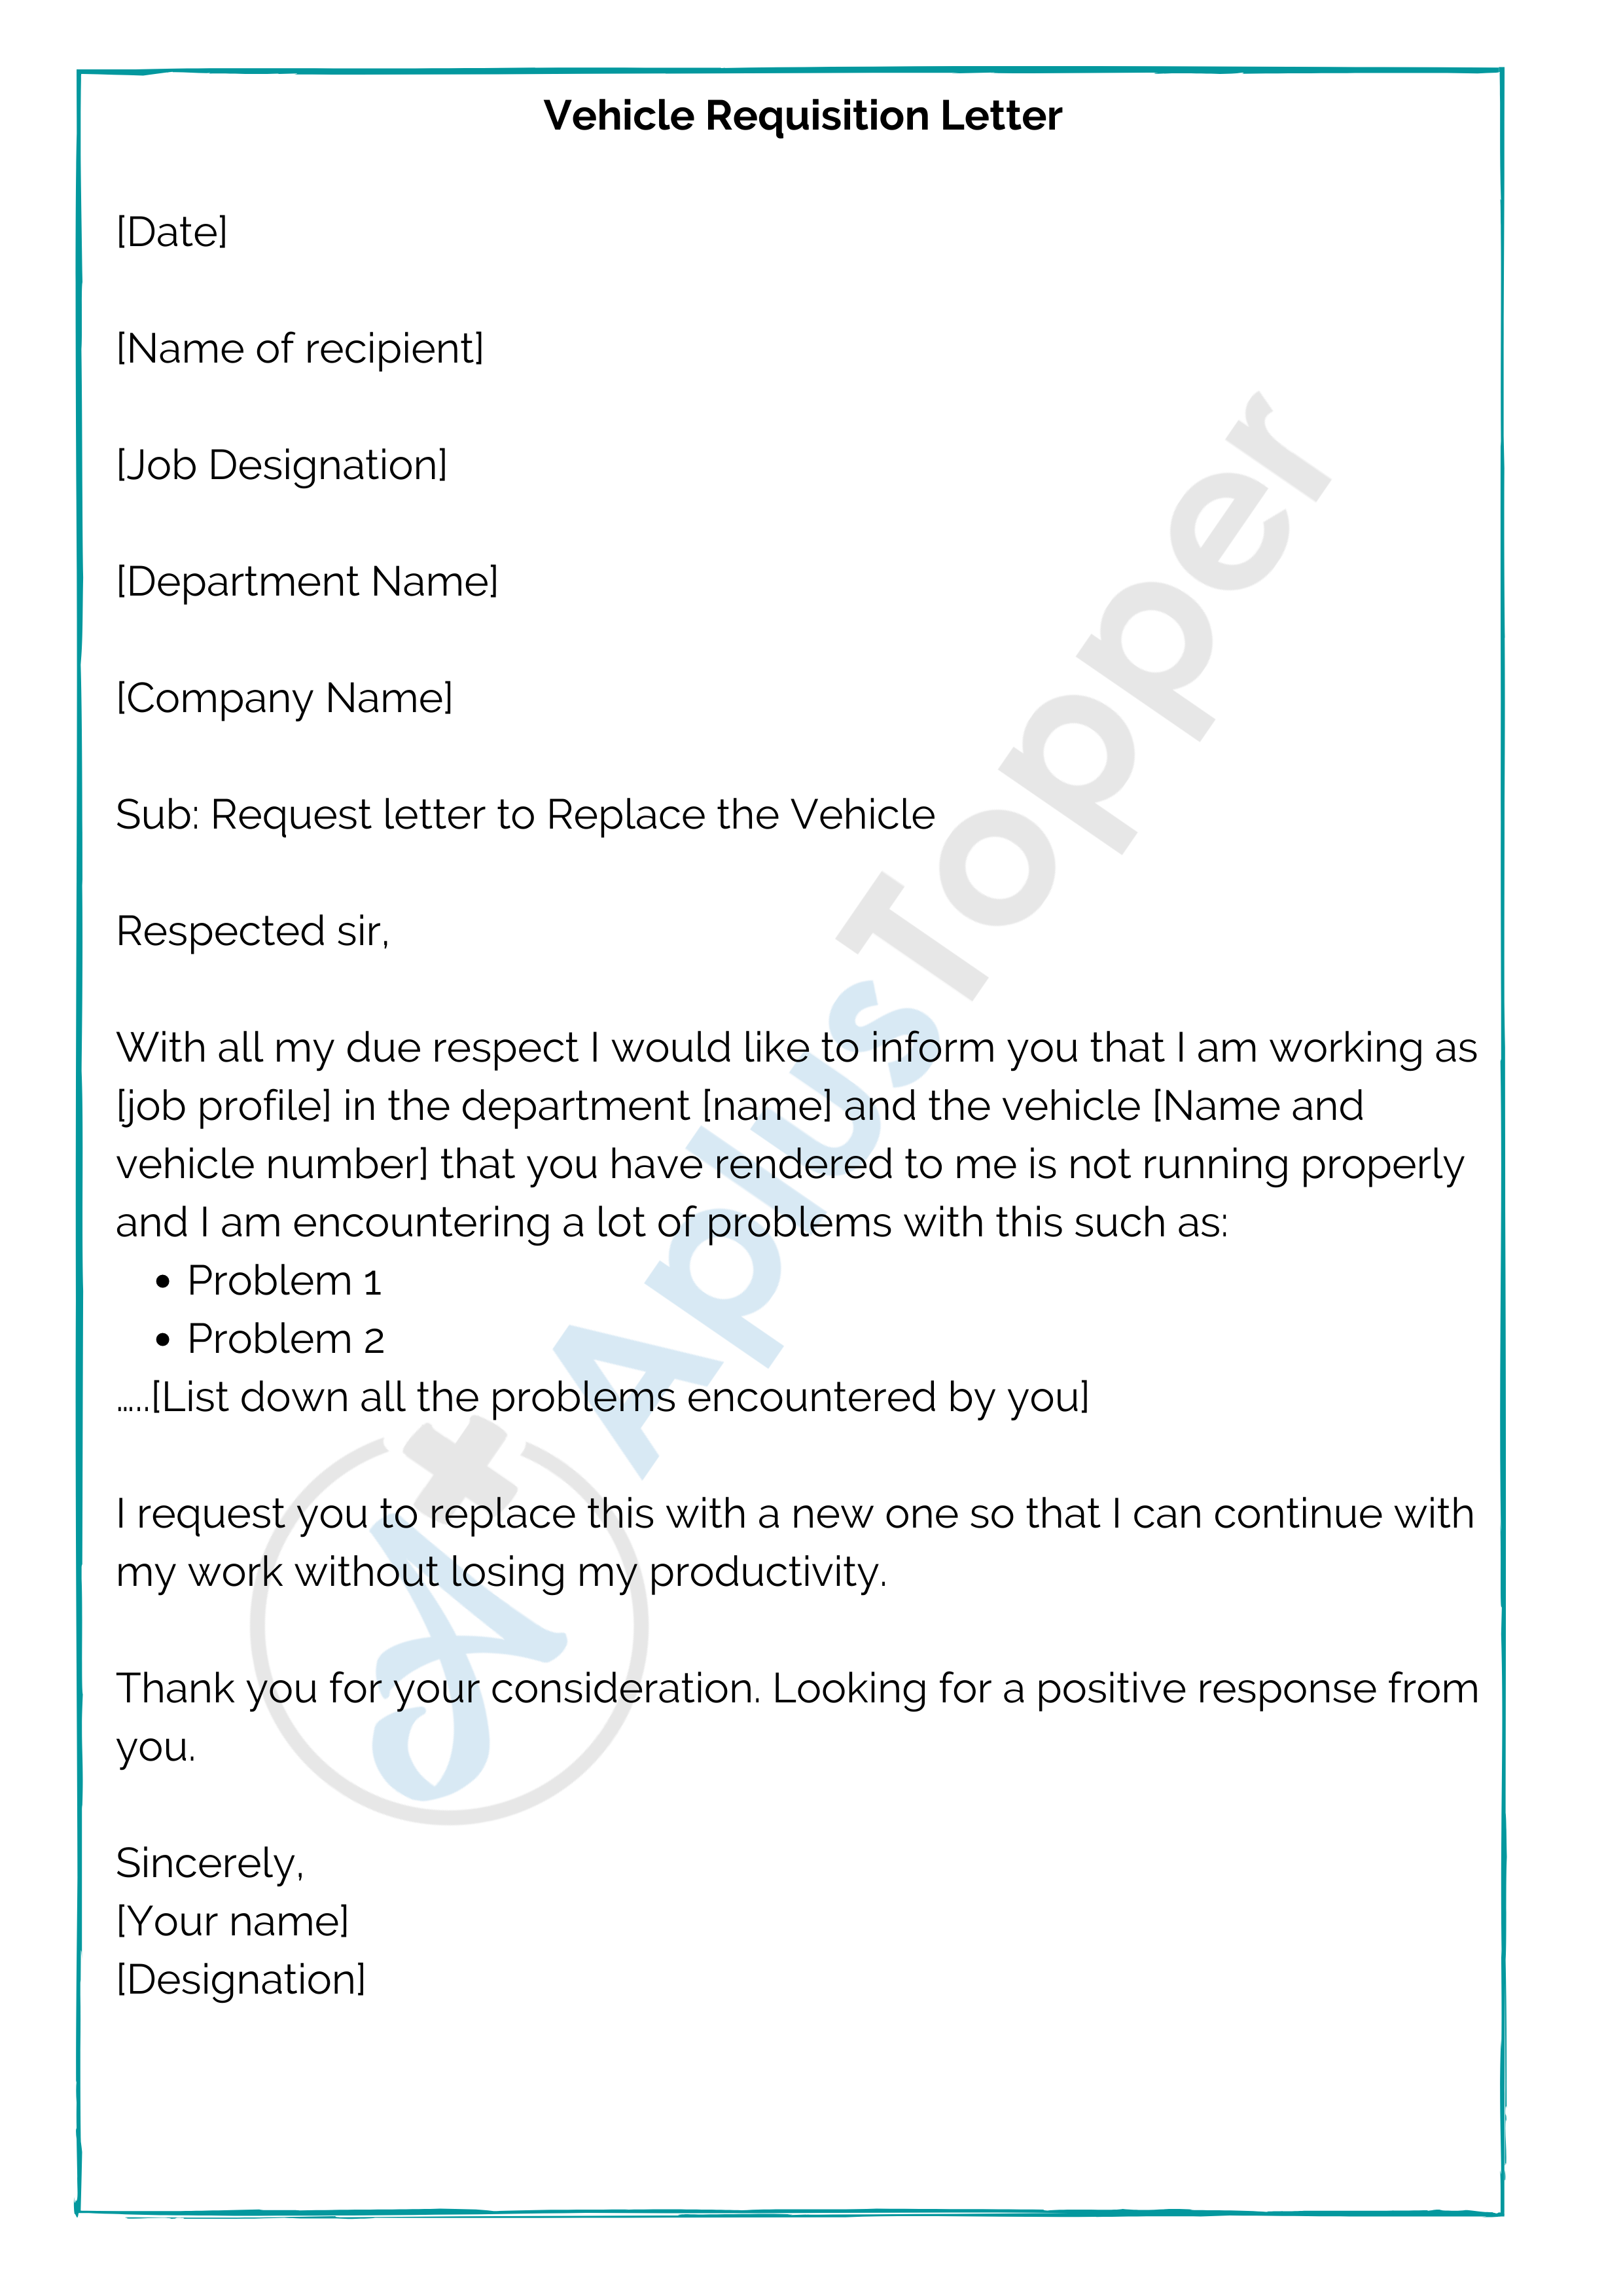 Vehicle Requisition Letter